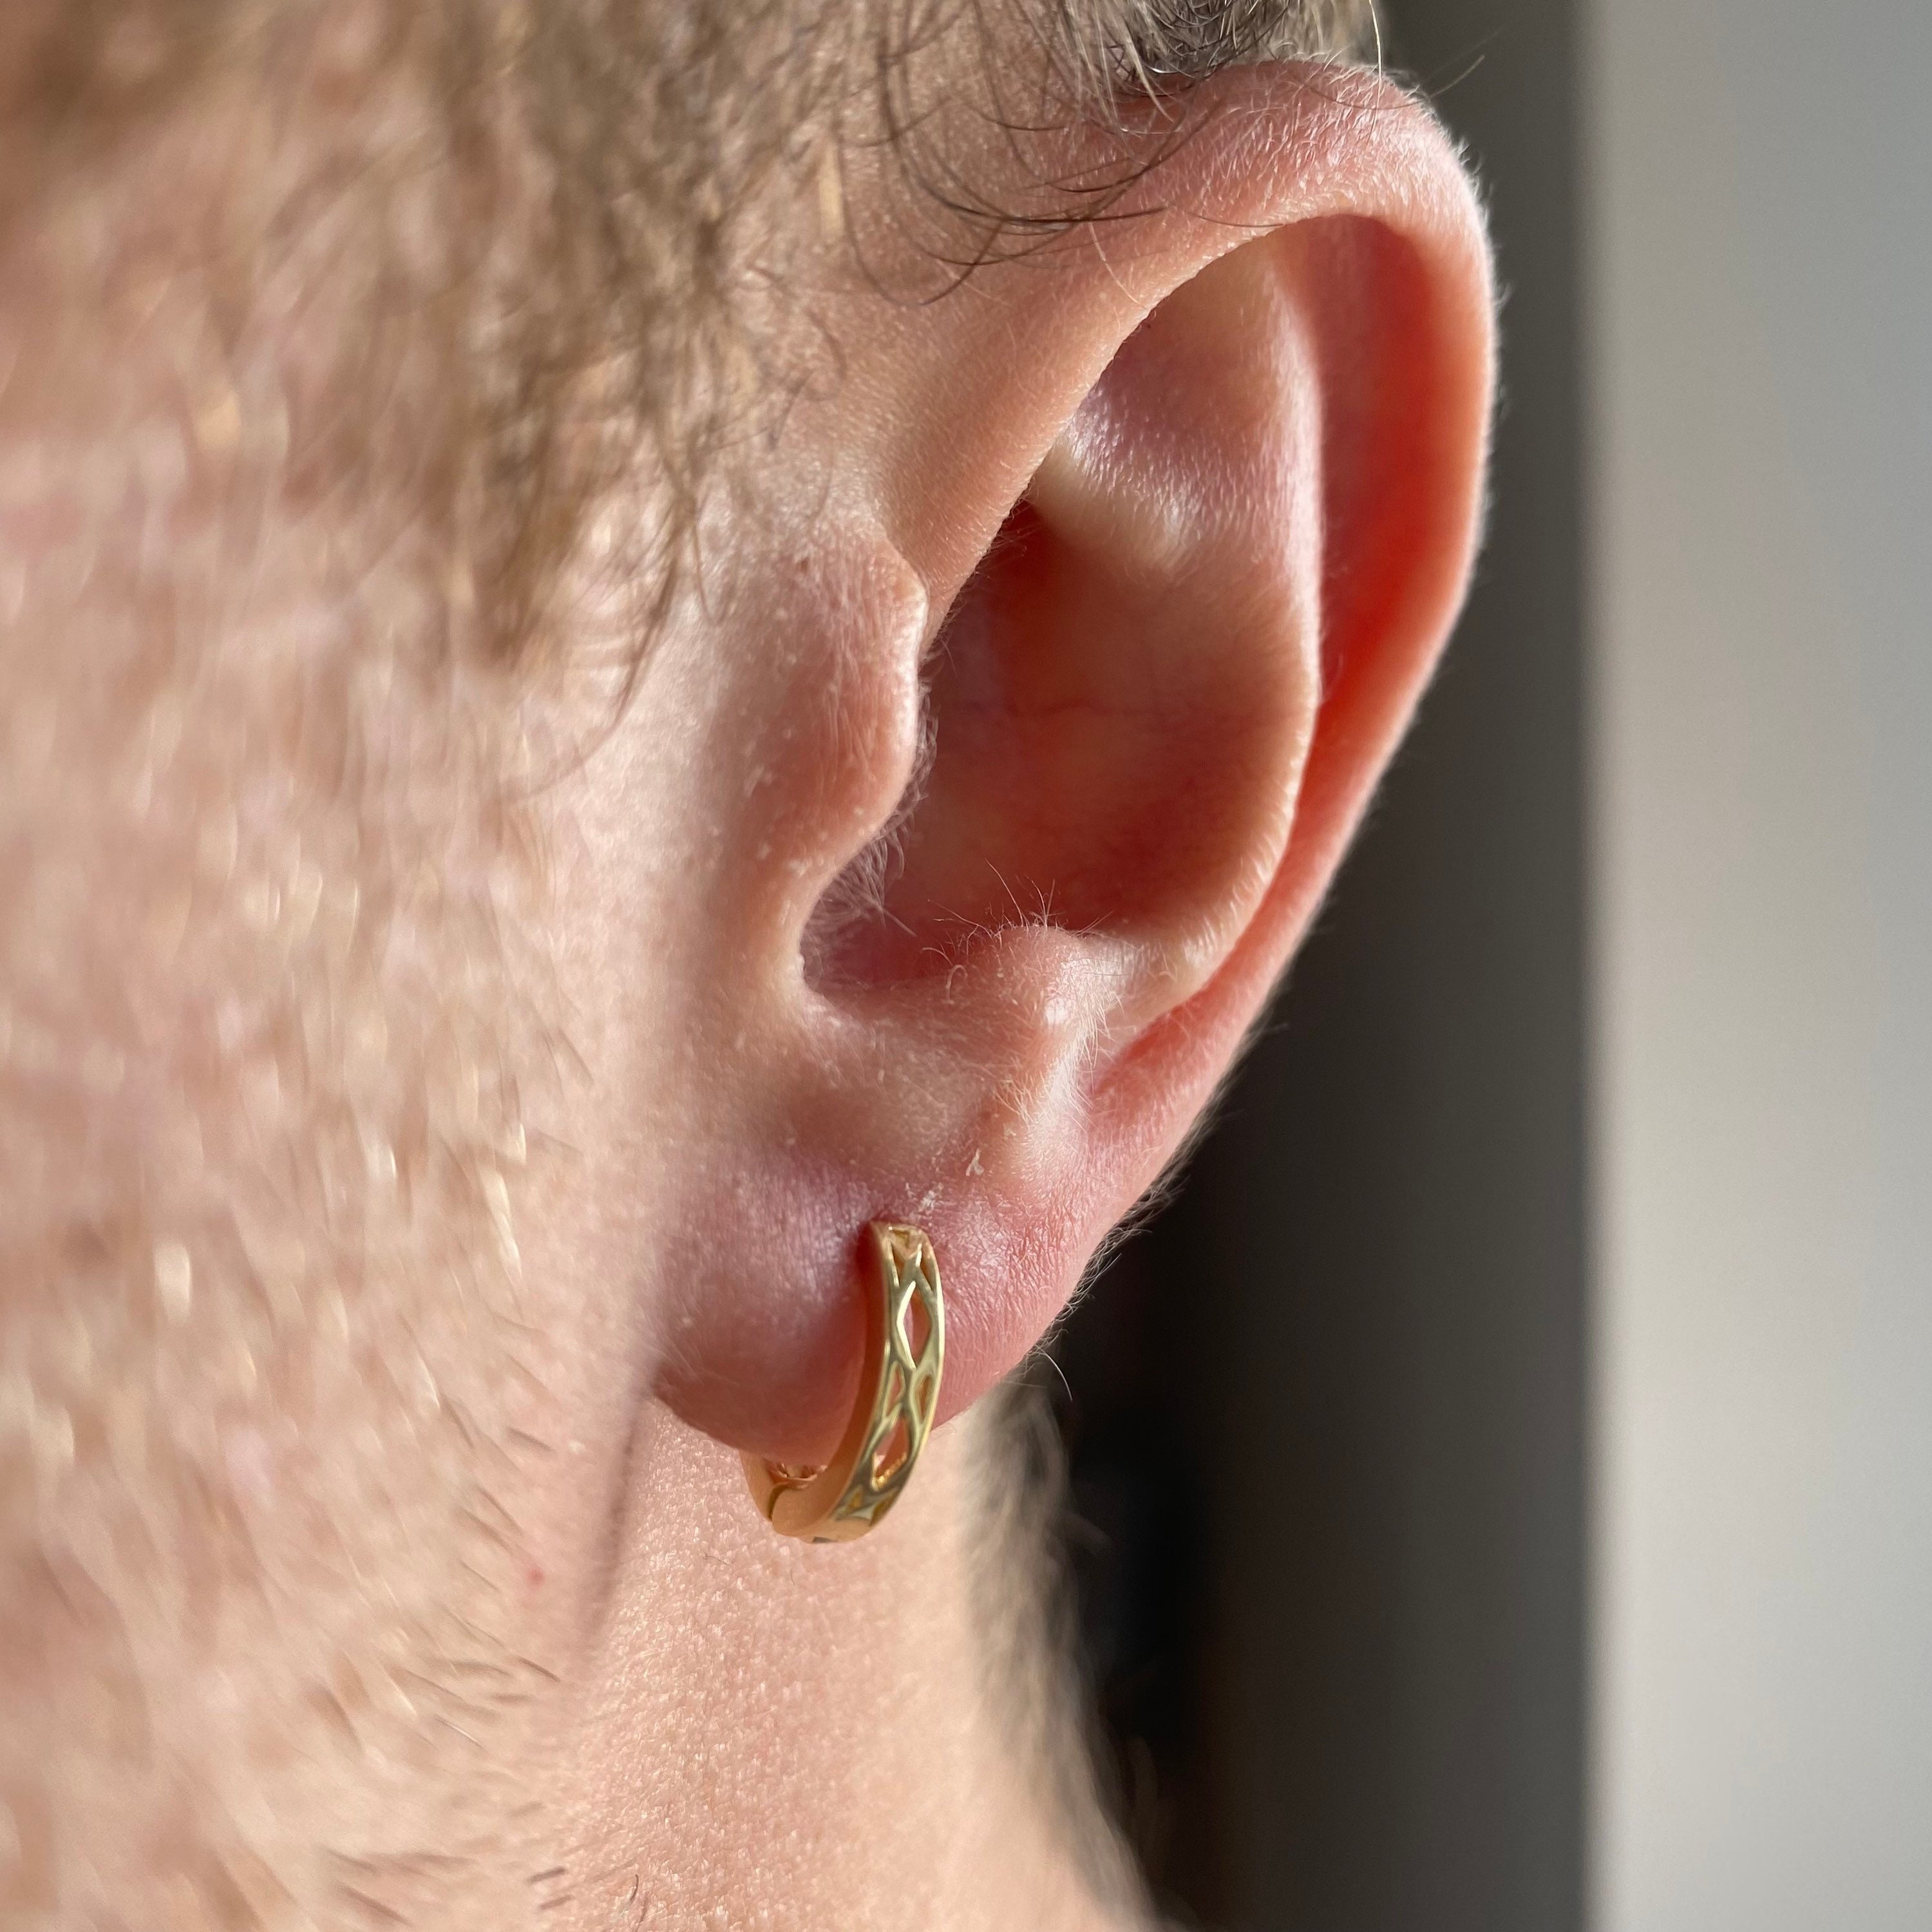 Wicked Solar Burst Diamond Hoop Earring, Small Gold Hoop Earring, Mens  Earring, Cartilage Earring, Gauged Hoop Earring, Mens Hoop, E008DY - Etsy | Hoop  earrings small, Small gold hoop earrings, Diamond hoop